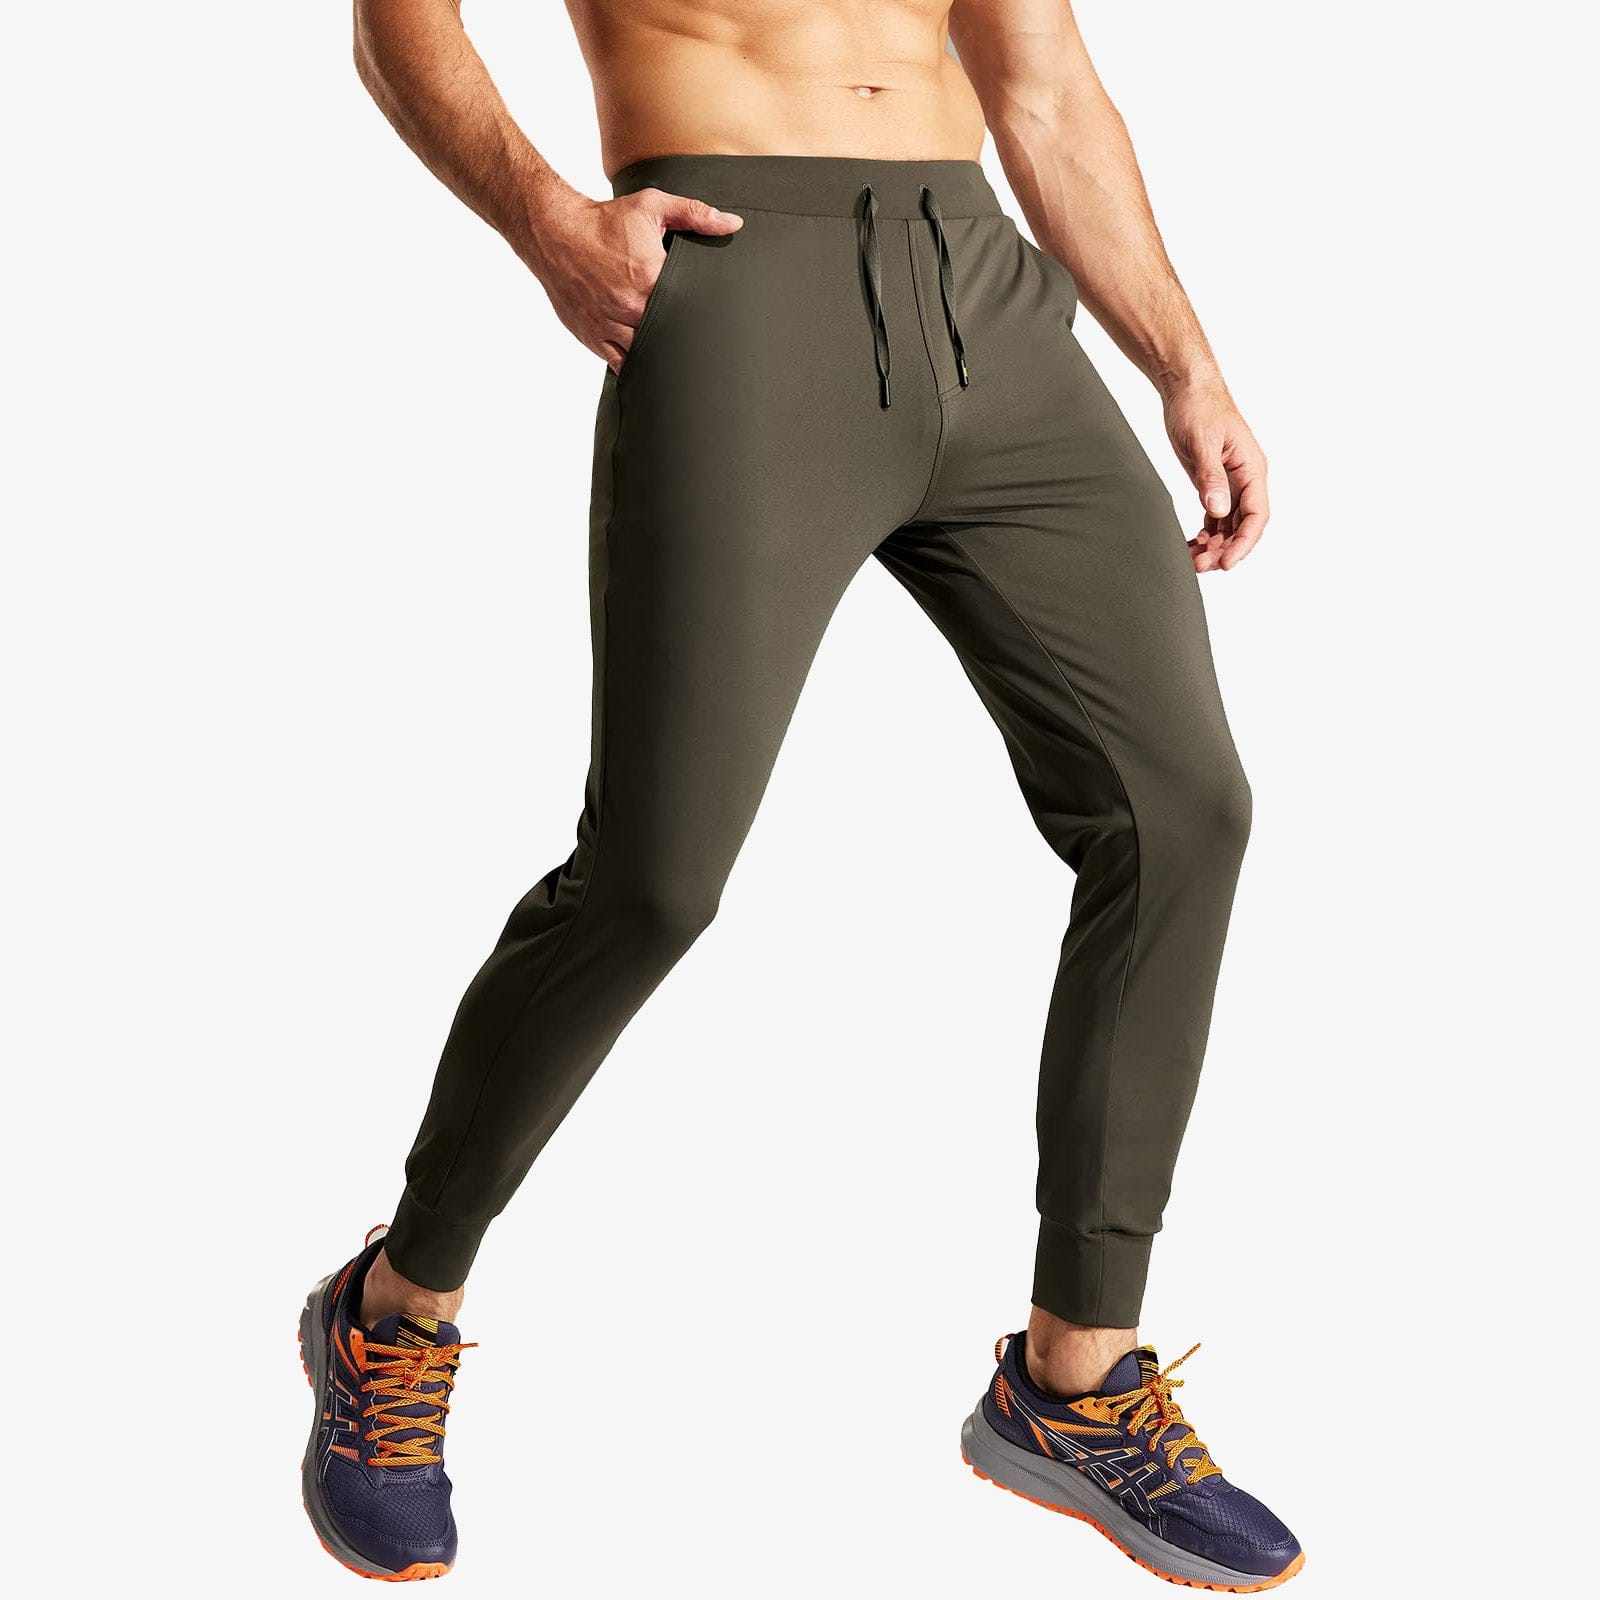 Men's Jogger Sweatpants Slim Fit Nylon Stretch Athletic Track Pants Men Train Pants Olive Green / S MIER